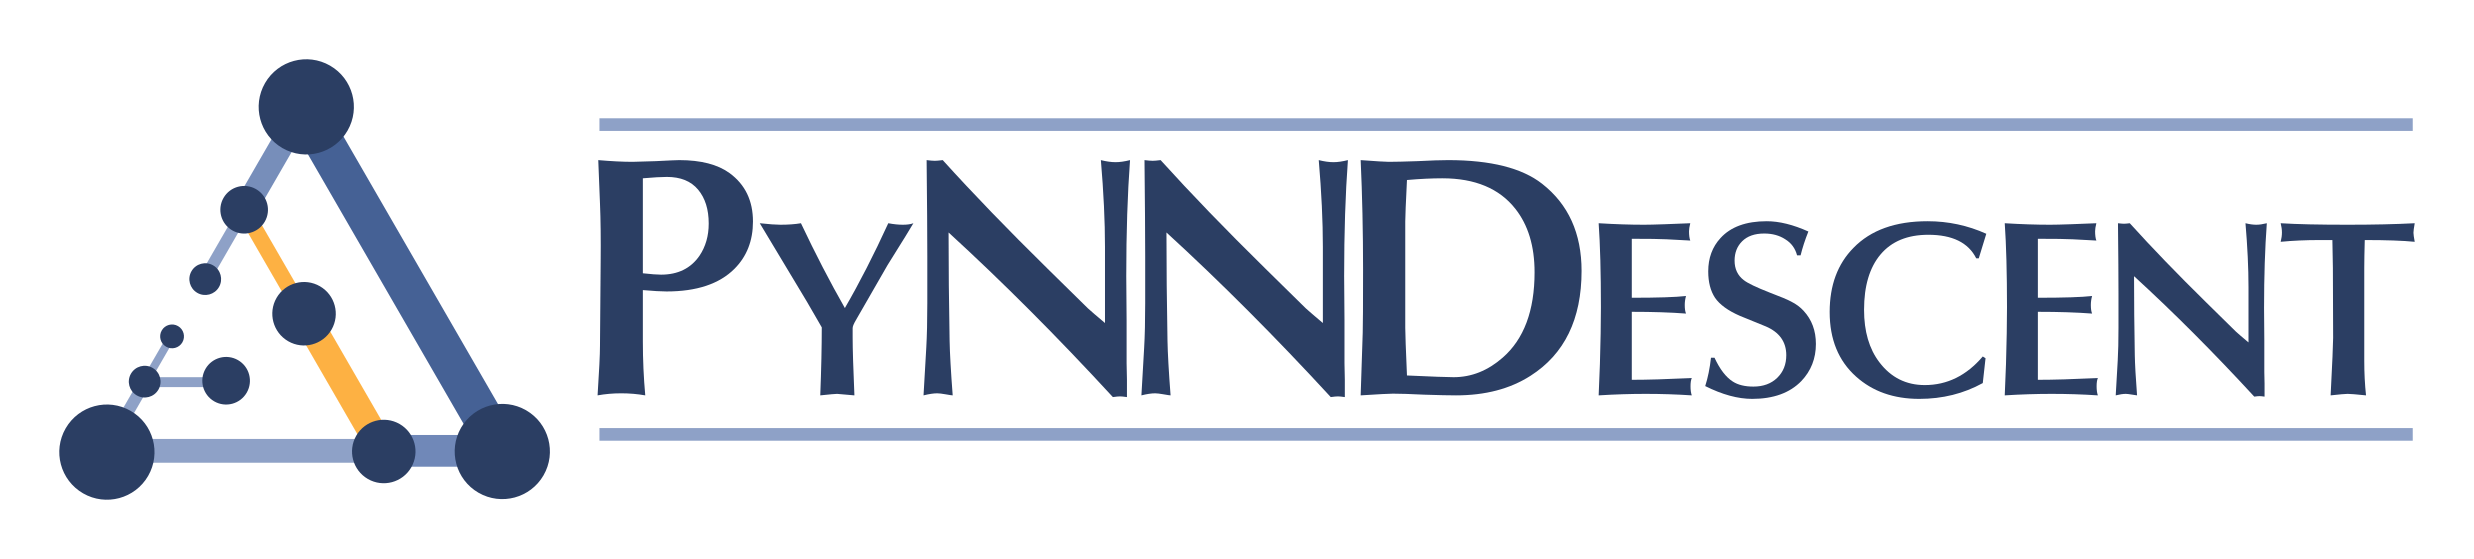 PyNNDescent Logo